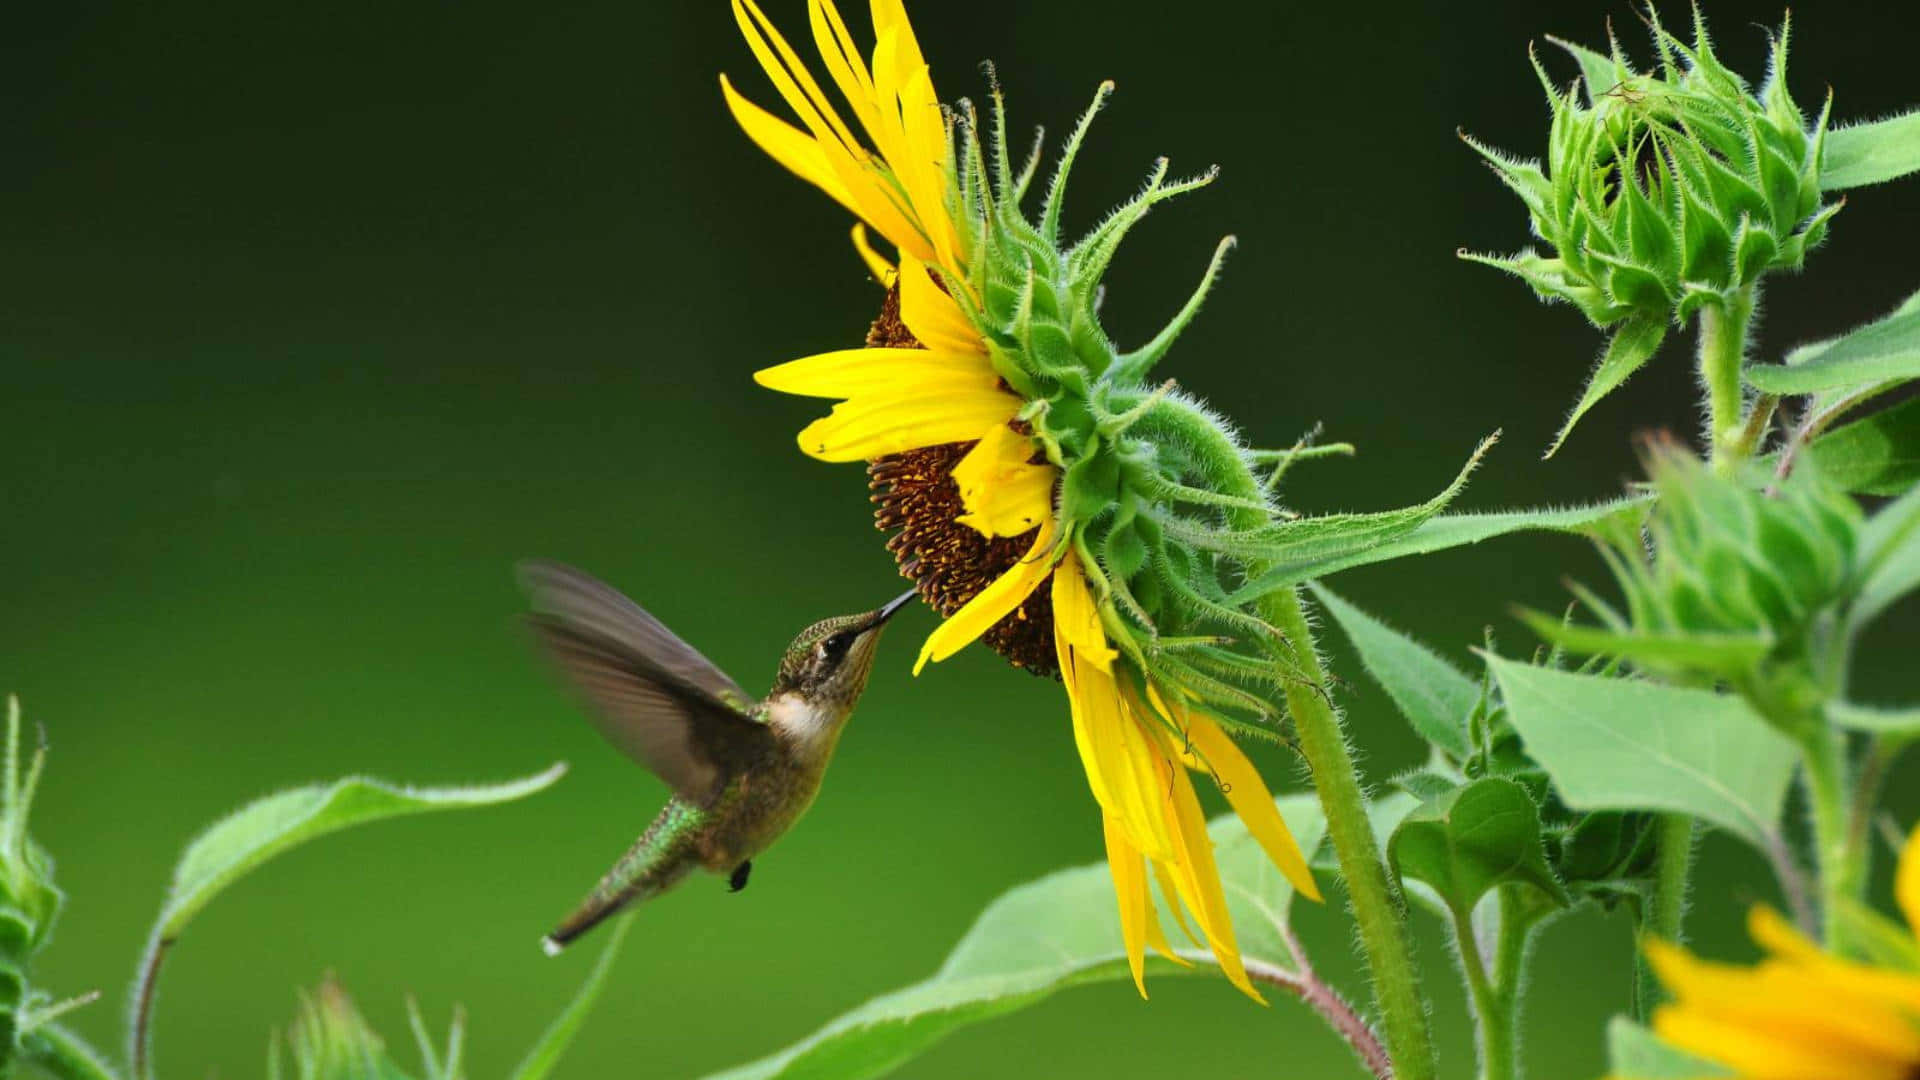 A beautiful hummingbird resting in a flower.